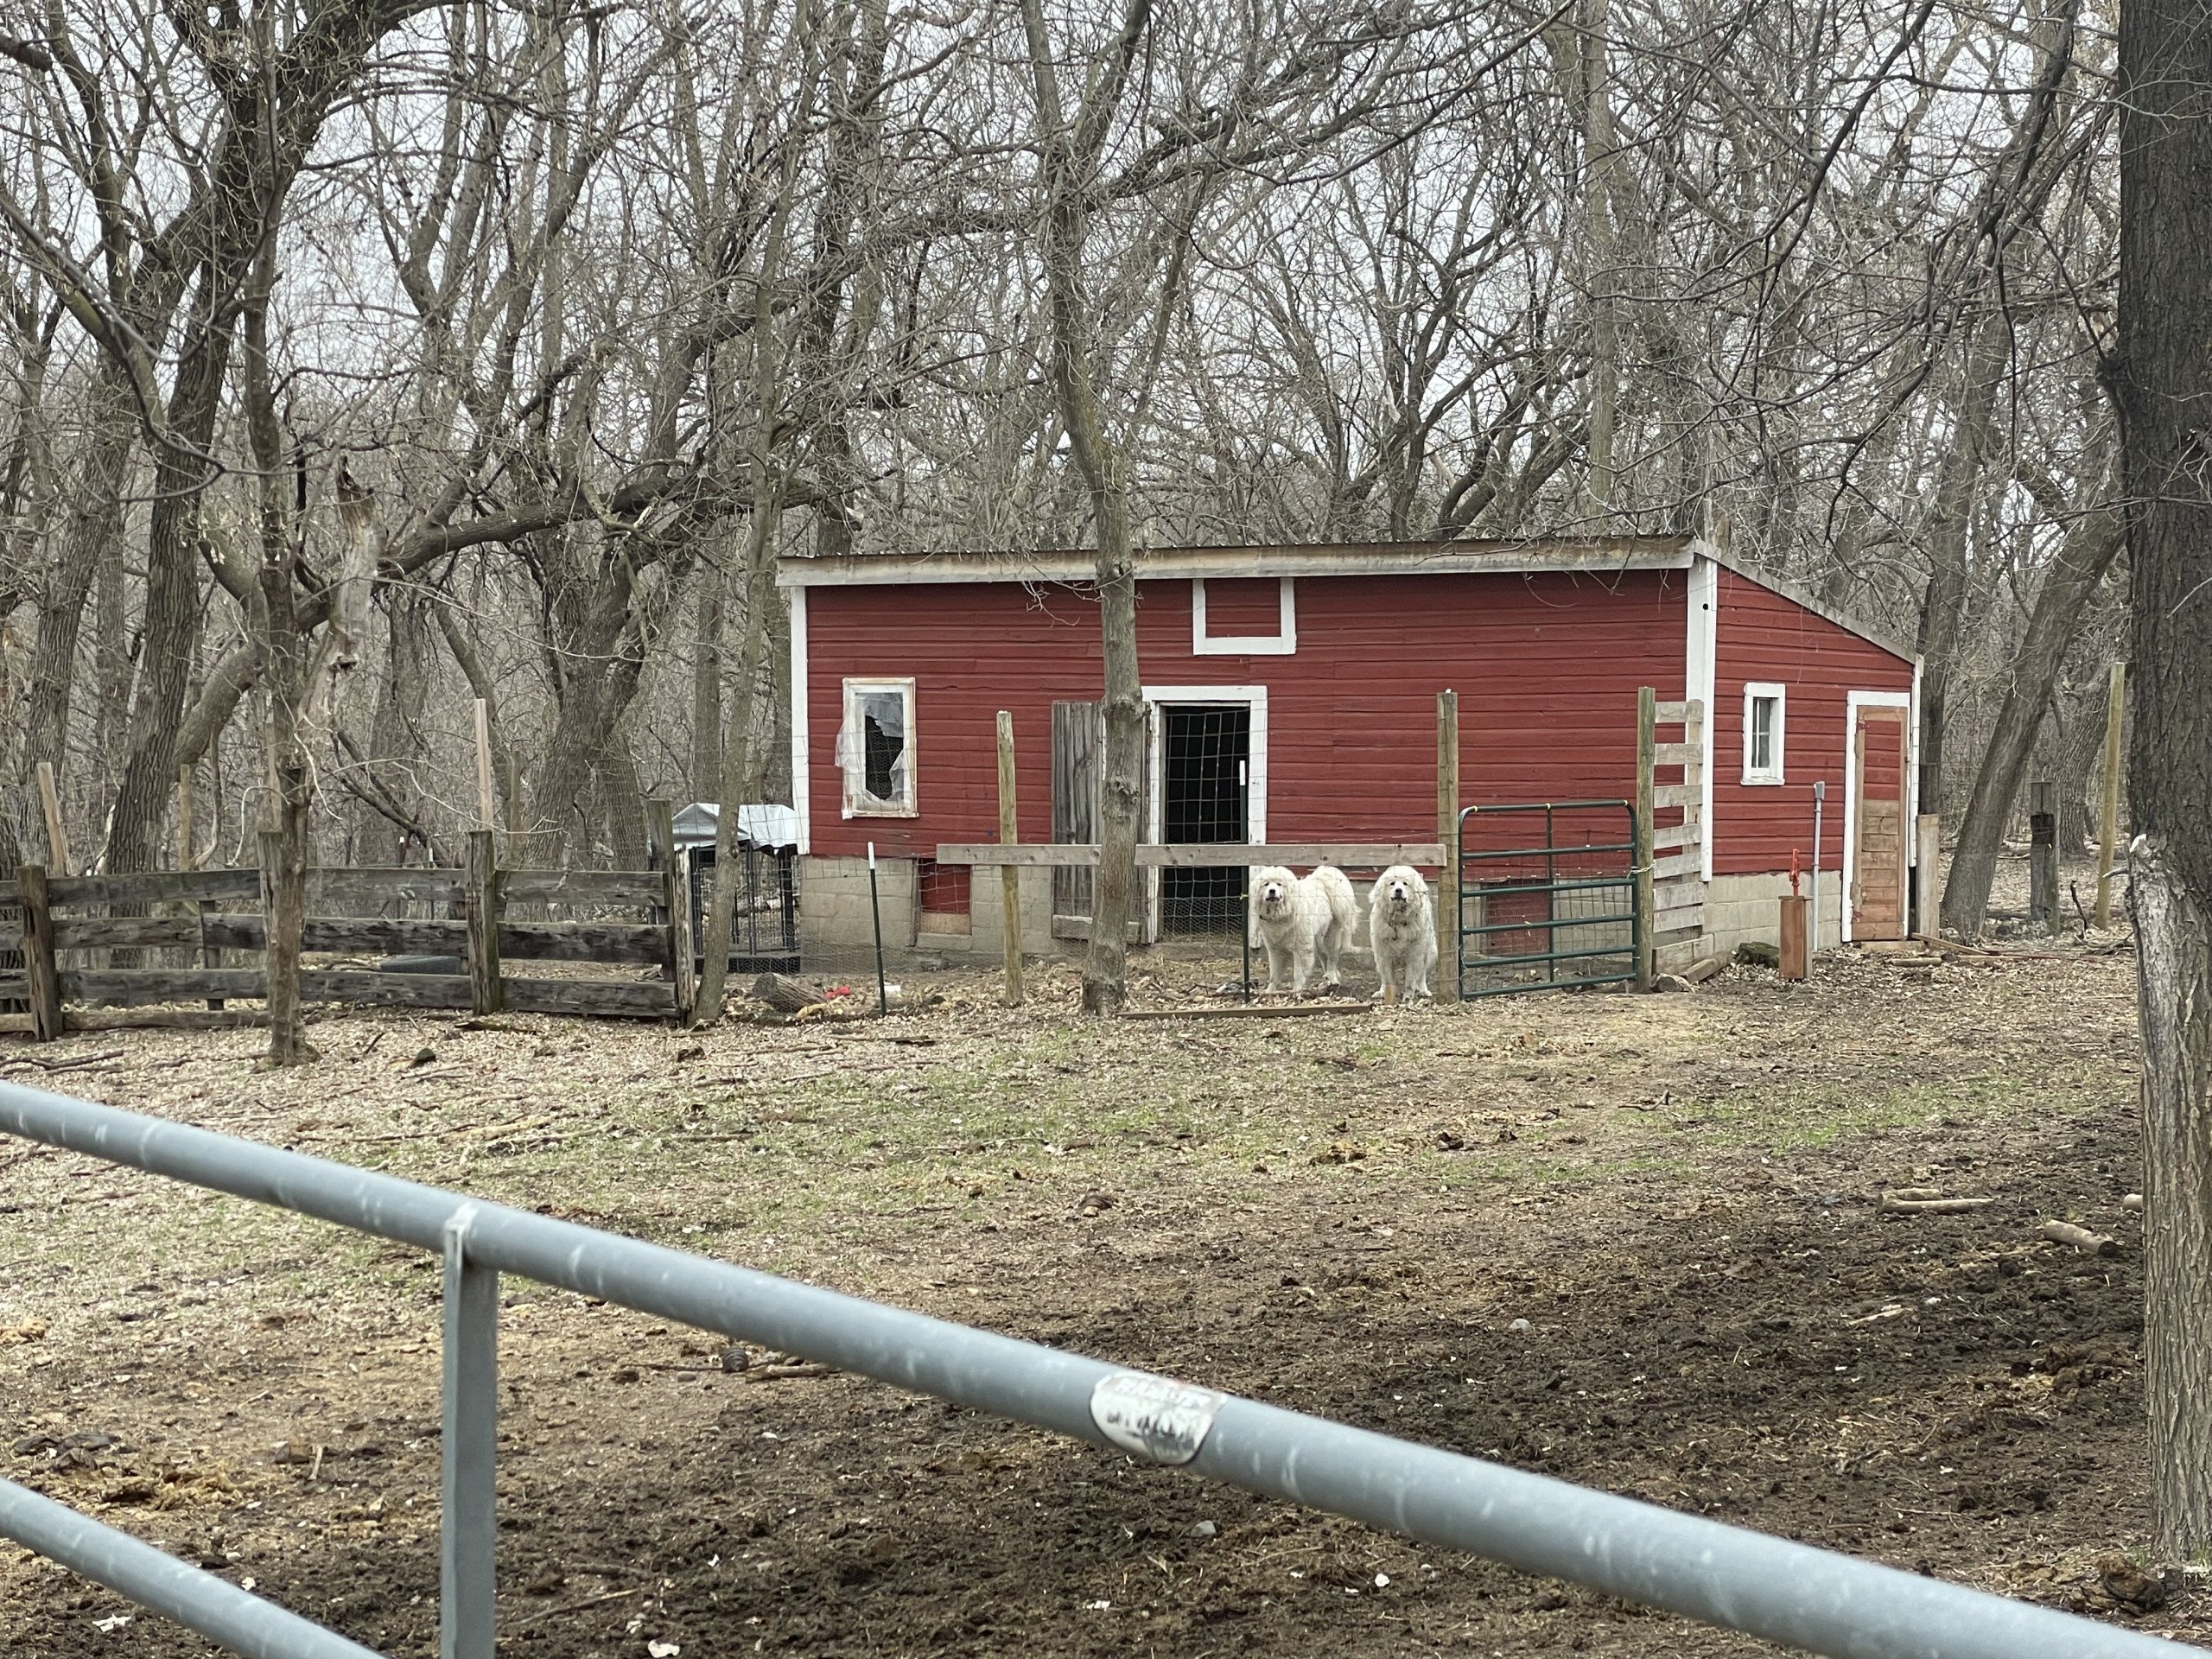 Goat / Small Animal Building Hobby Farm Clear Lake MN 